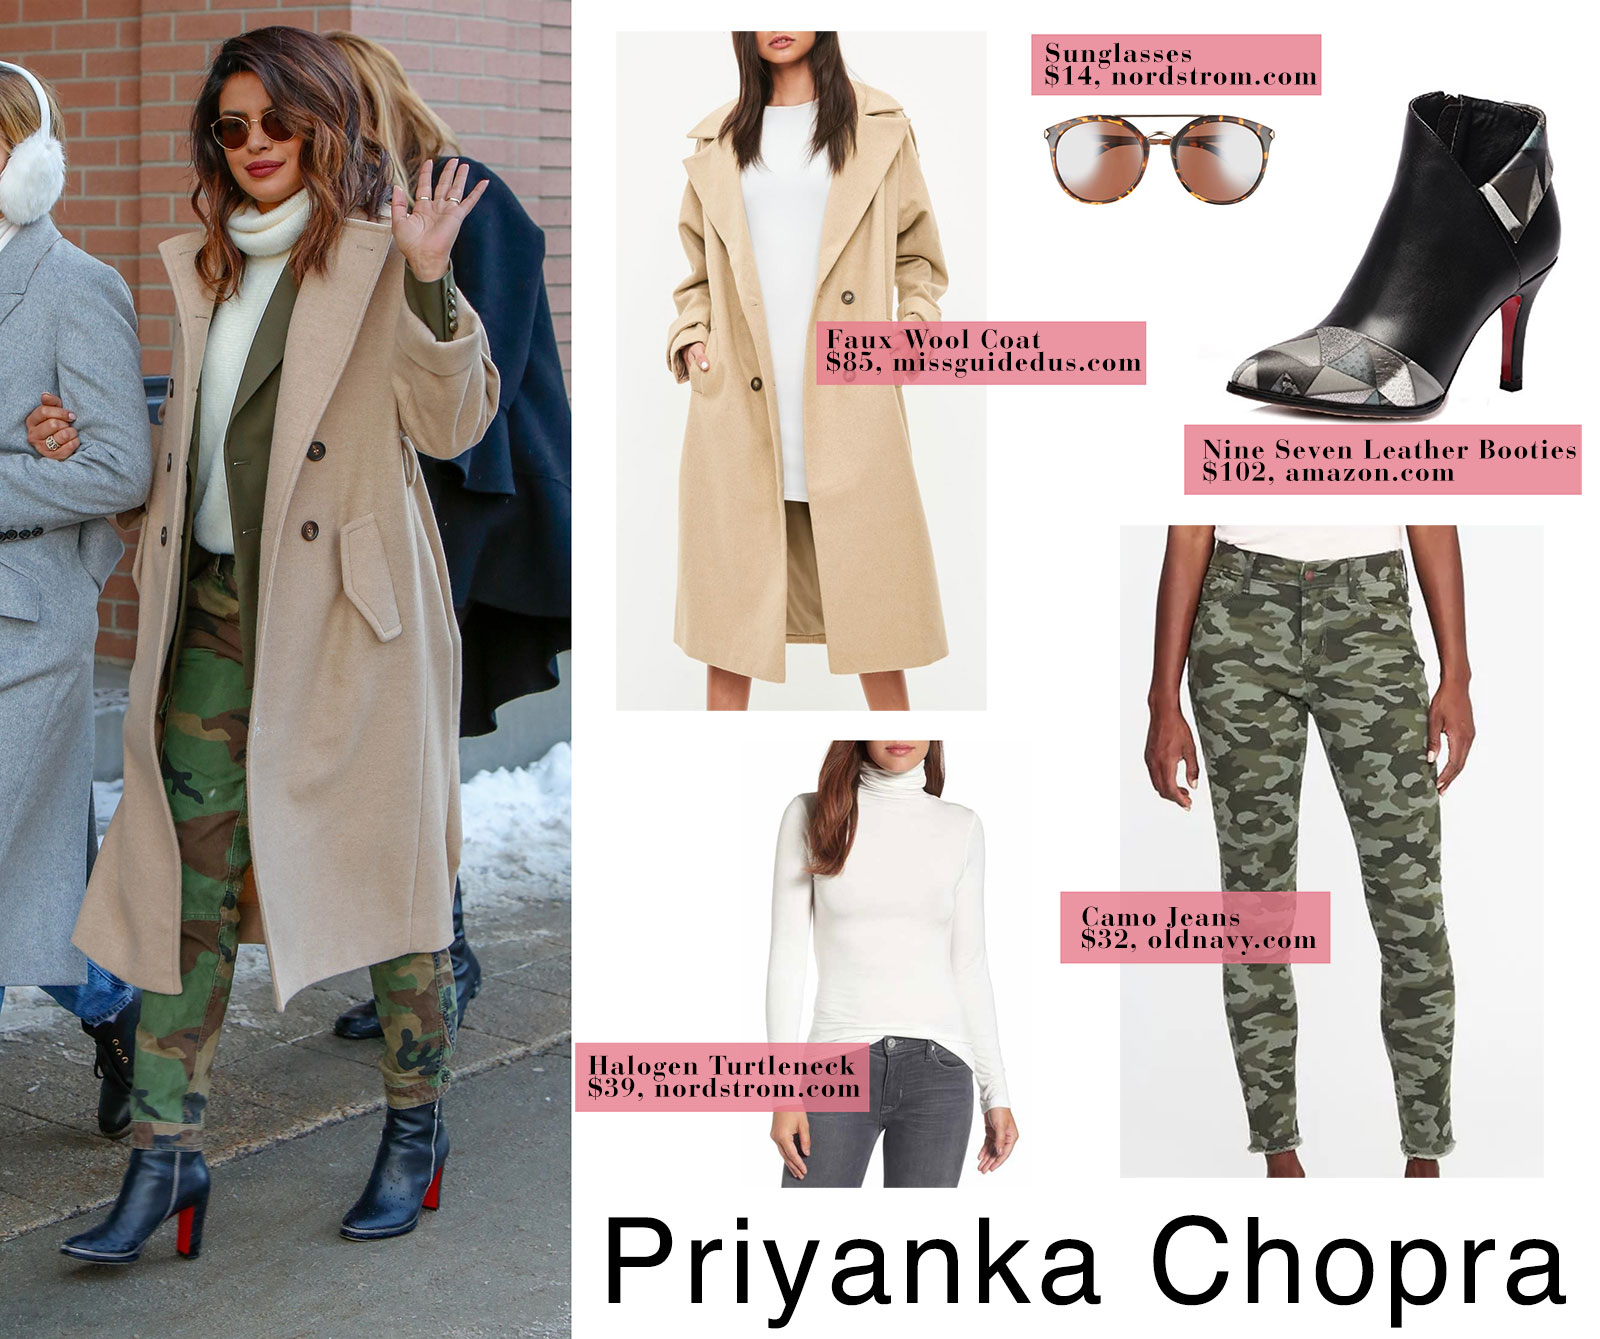 Priyanka Chopra in camel coat and camo pants